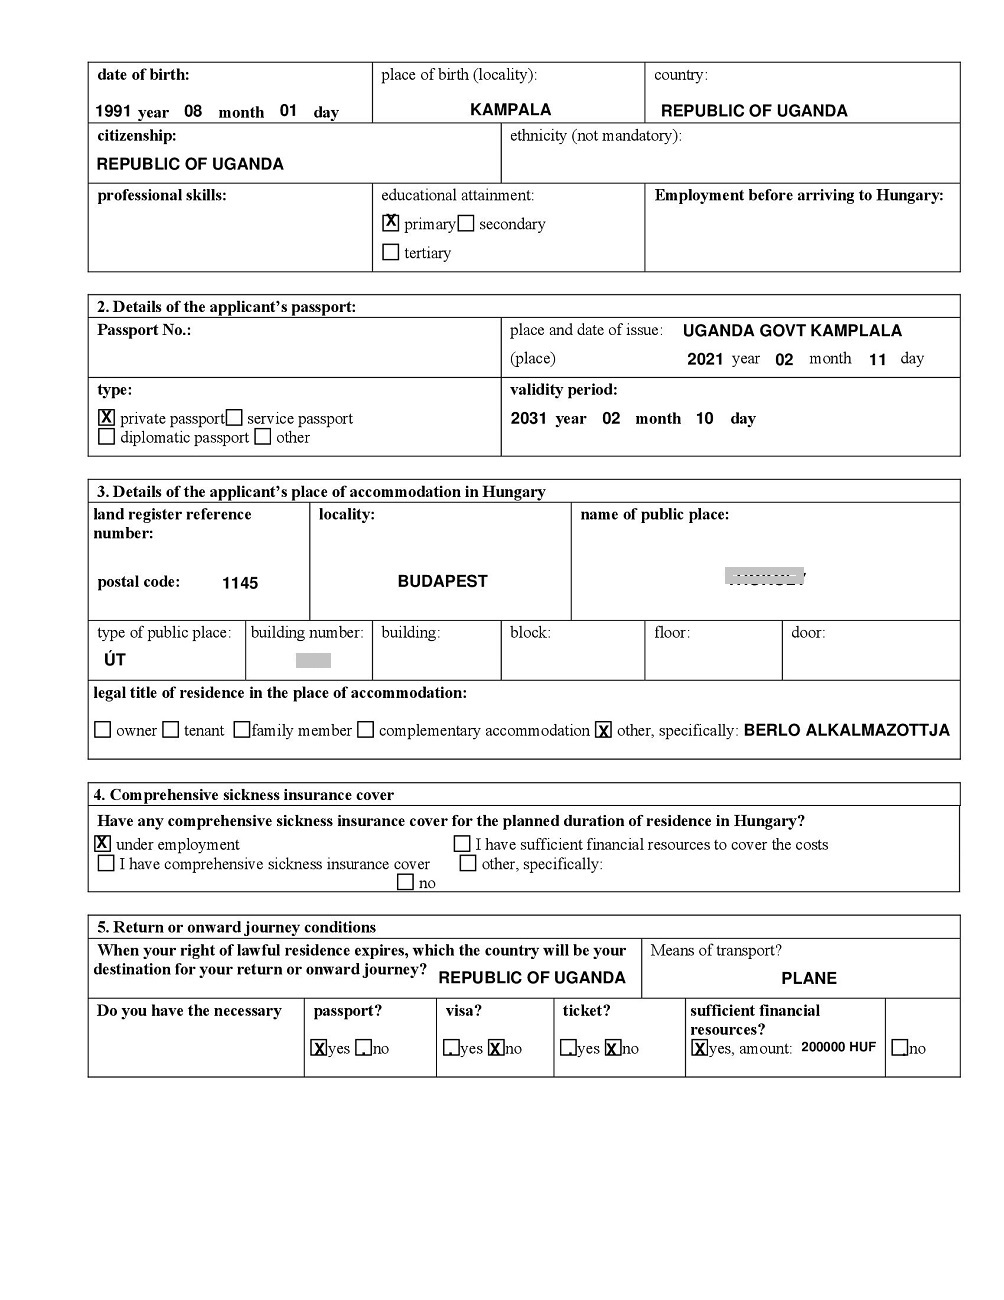 application form for Hungary work visa